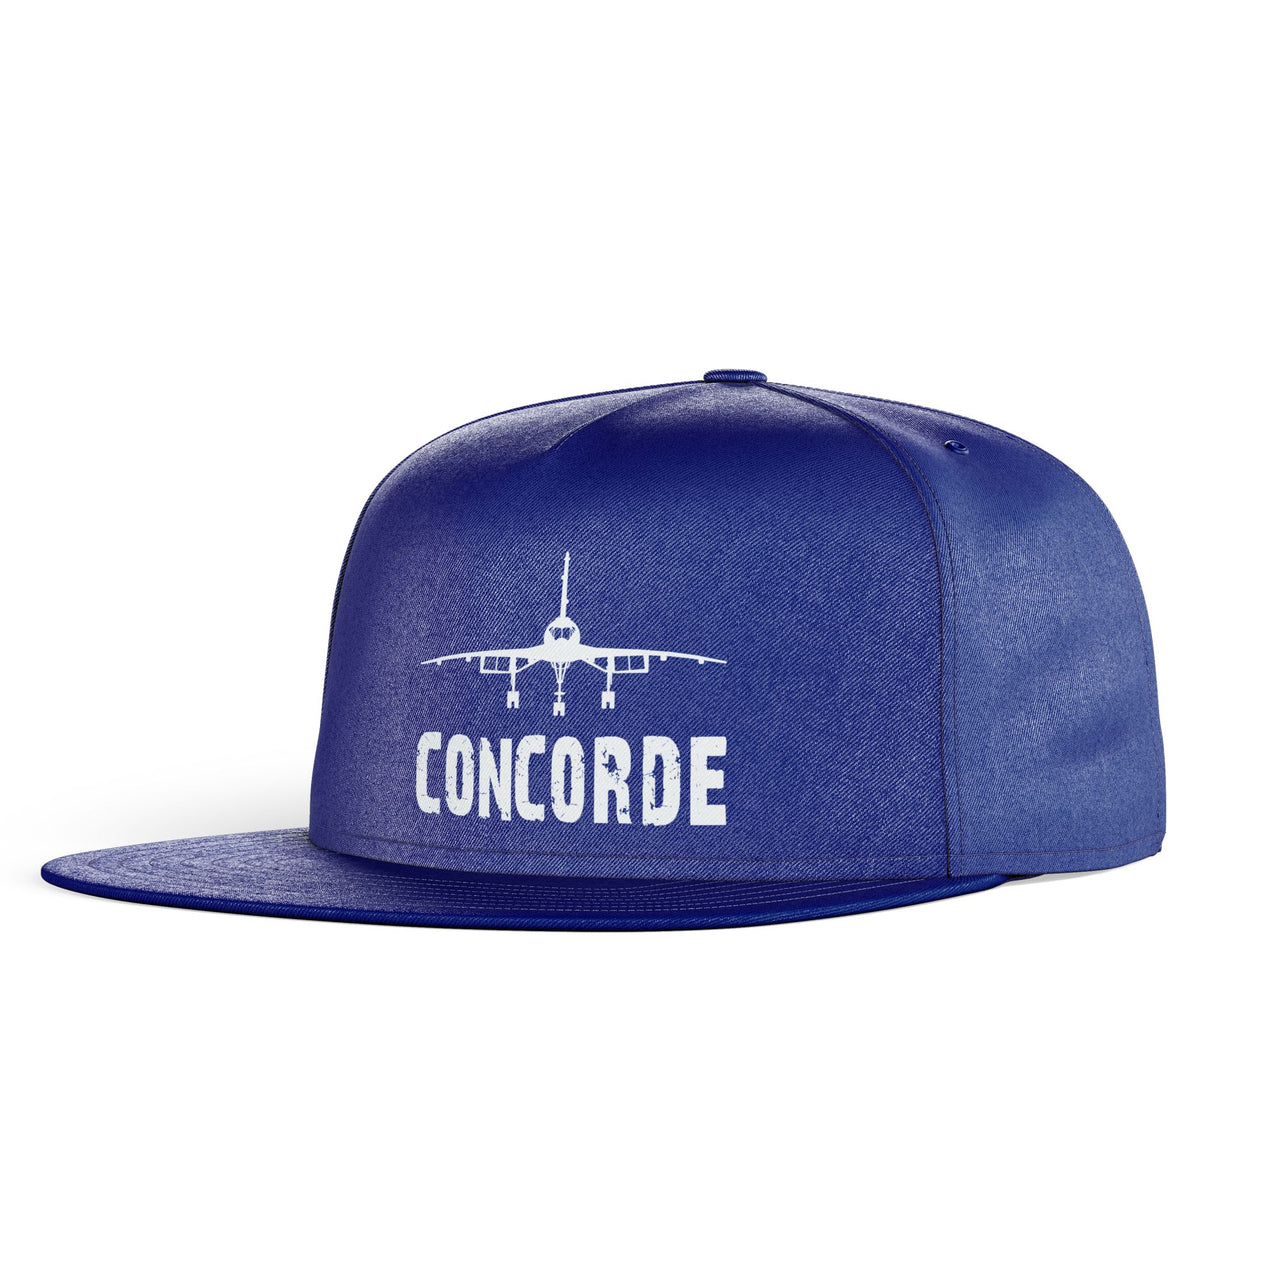 Concorde & Plane Designed Snapback Caps & Hats